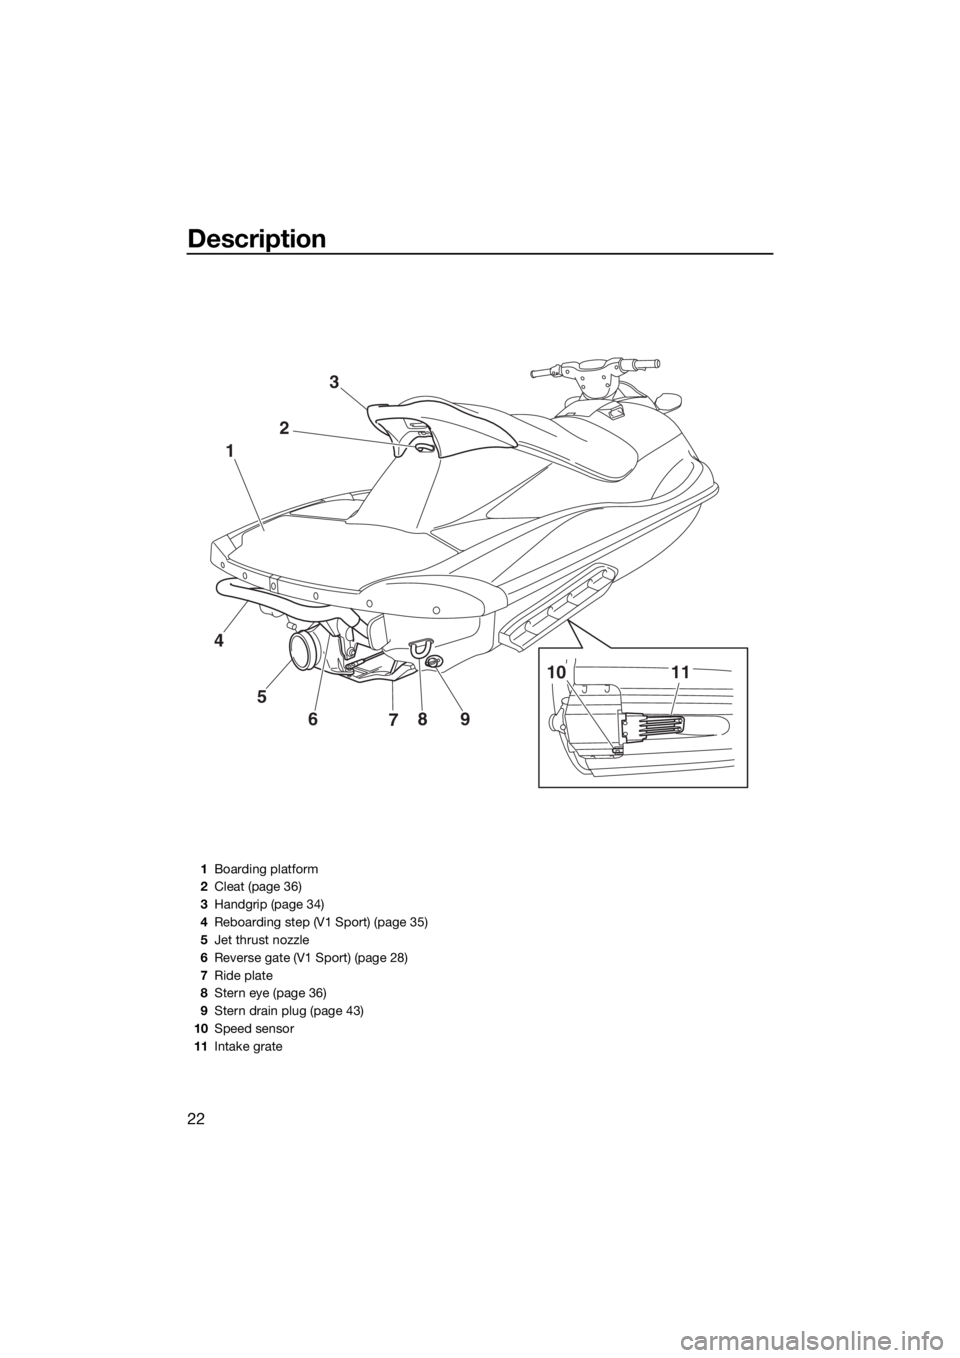 YAMAHA V1 2015  Owners Manual Description
22
9
8
7 6 5 4123
10 11
1Boarding platform
2Cleat (page 36)
3Handgrip (page 34)
4Reboarding step (V1 Sport) (page 35)
5Jet thrust nozzle
6Reverse gate (V1 Sport) (page 28)
7Ride plate
8Ste